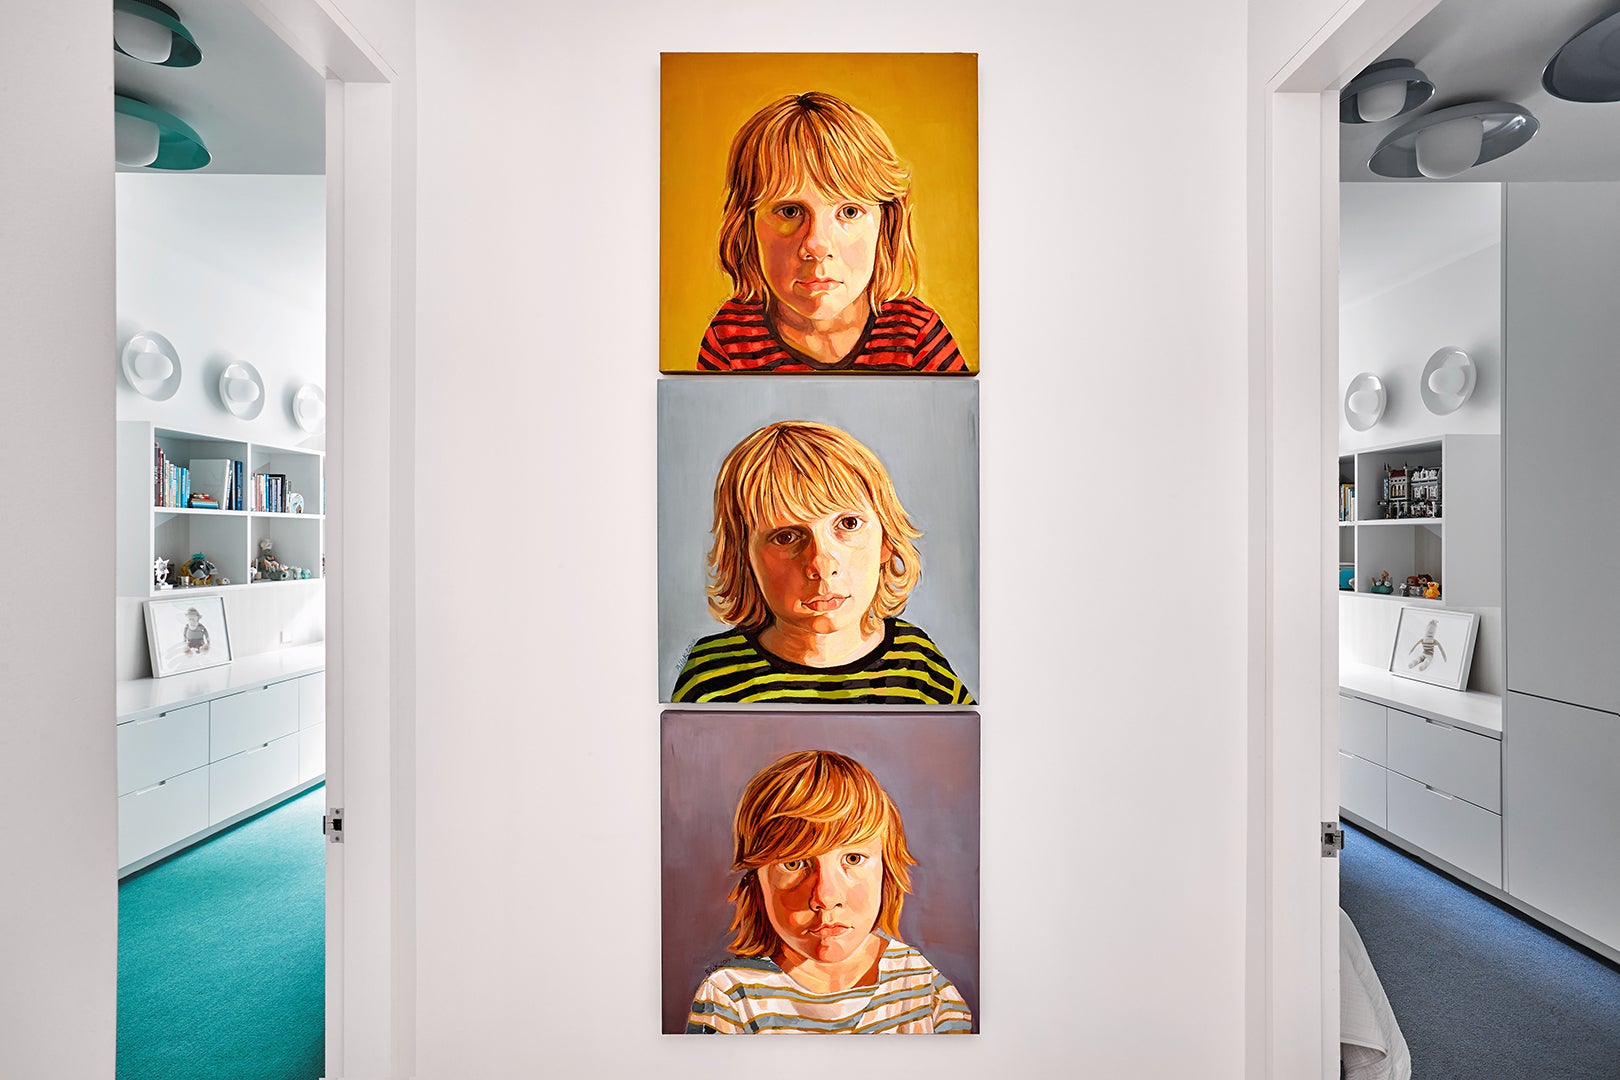 Painted portraits of three boys hanging in vestibule.